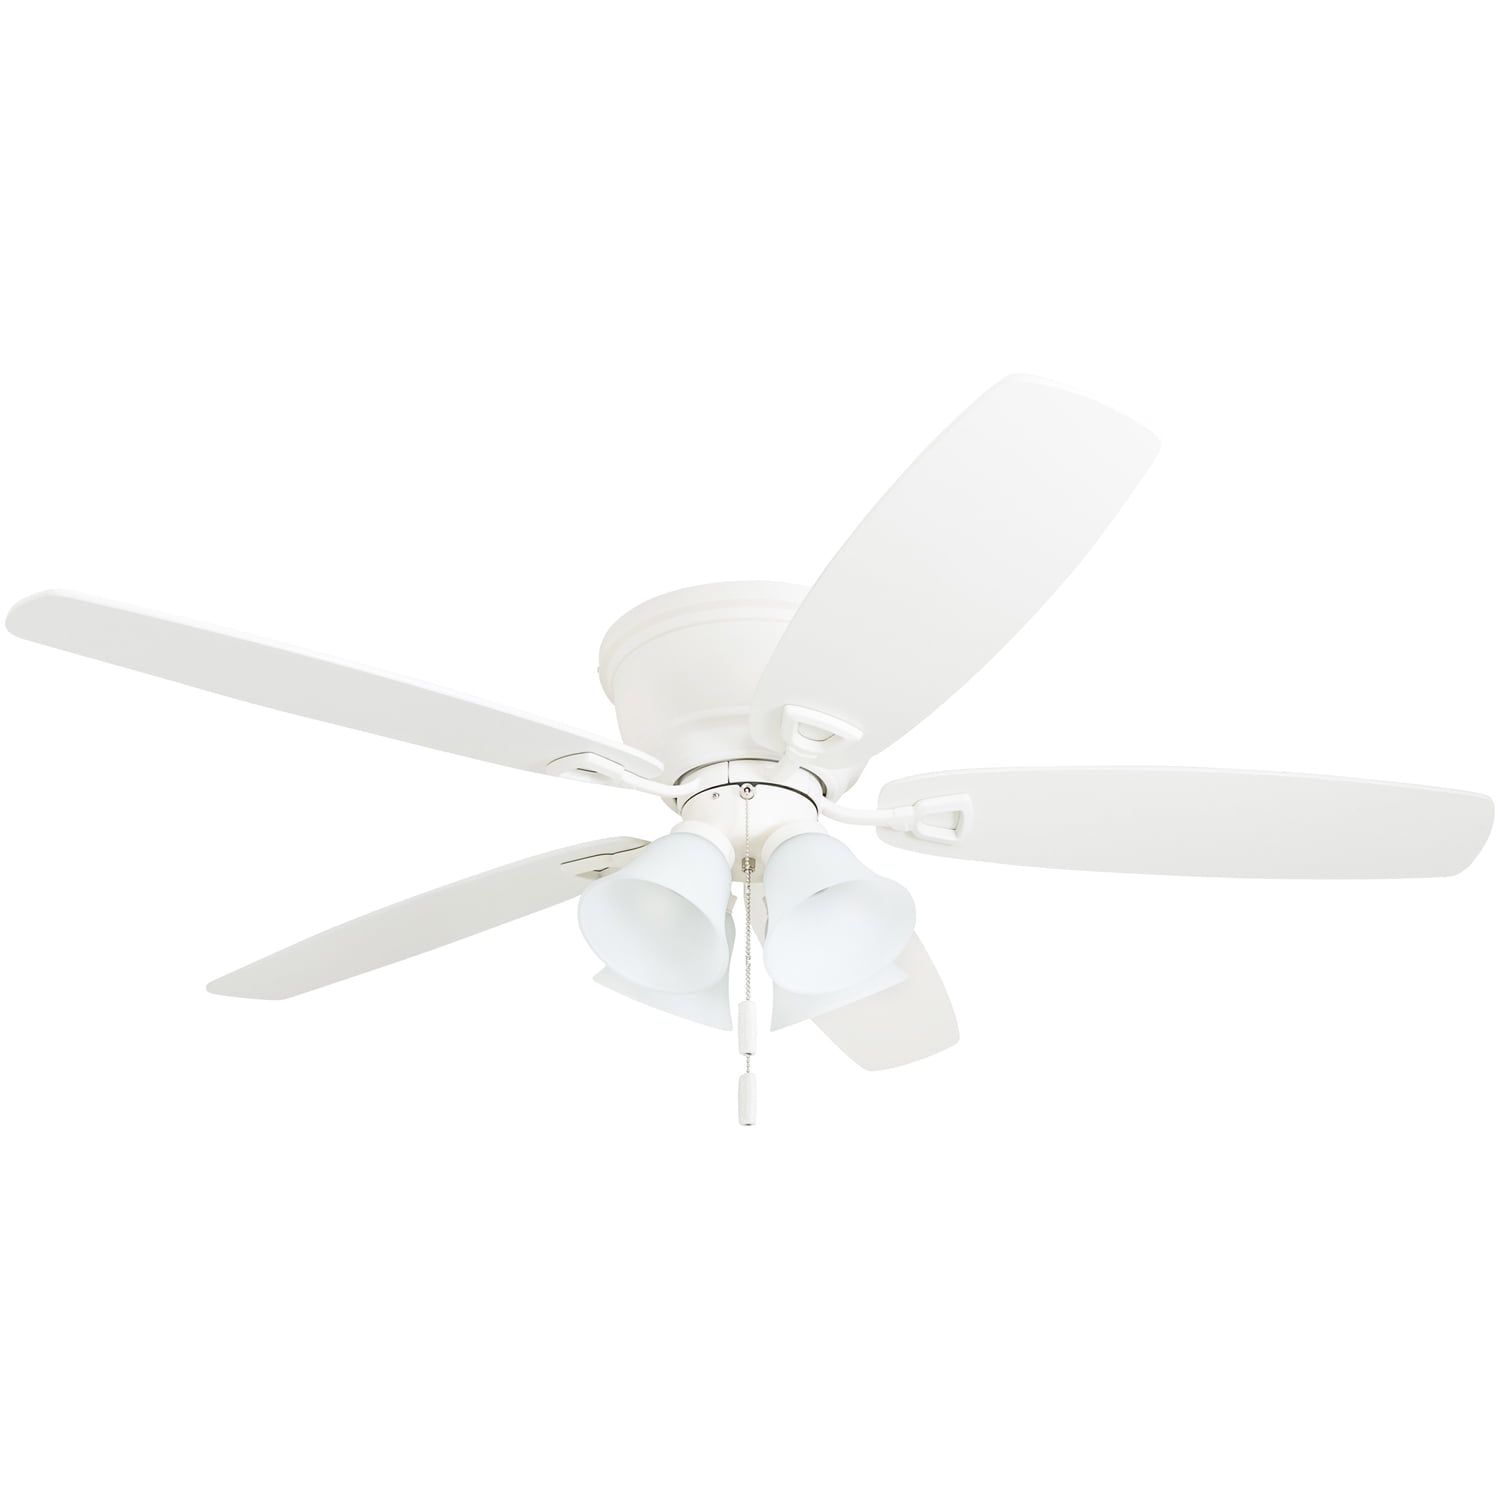 Large 52" Ceiling Fan Clean White Maple LED Light Kit Flush Mount Low Clearance 